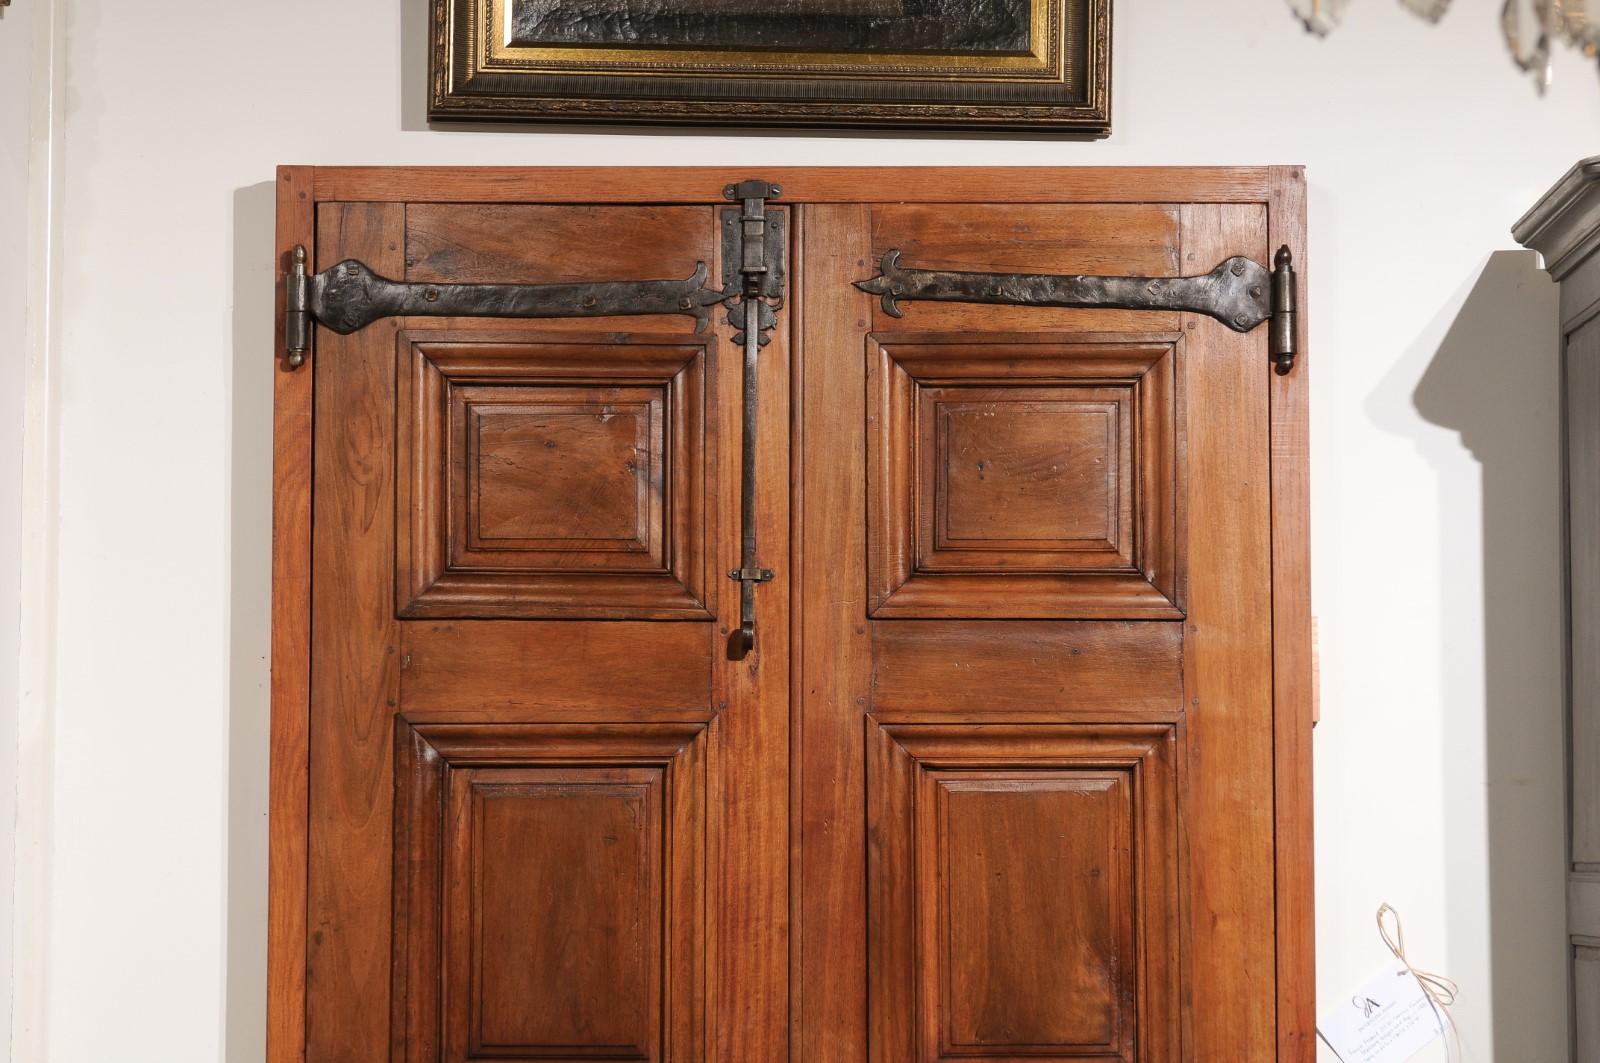 French Régence Period 1730s Walnut Communication Doors with Iron Hardware 4